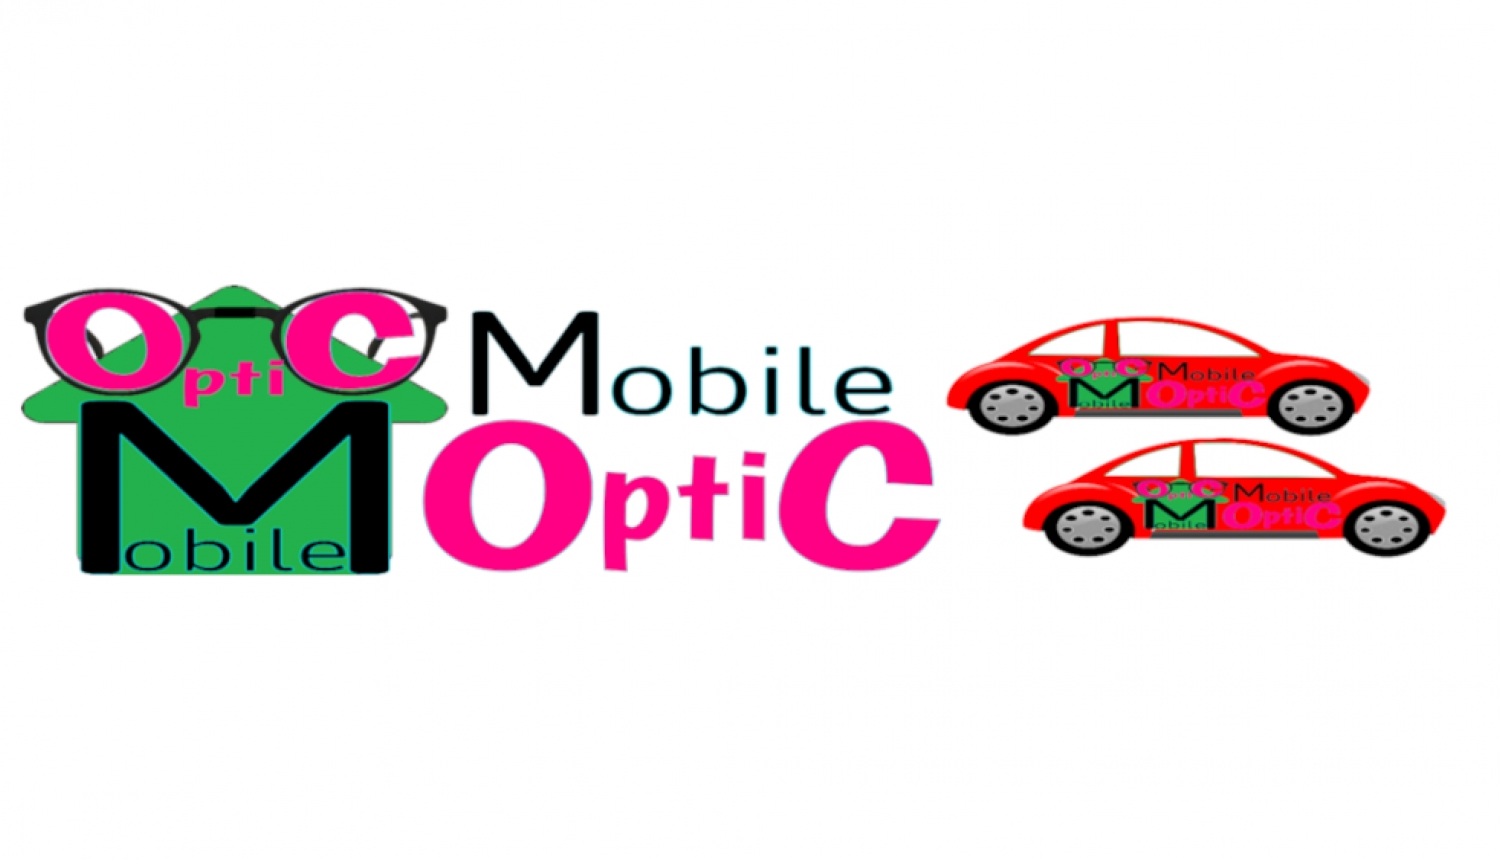 Mobile optic logo